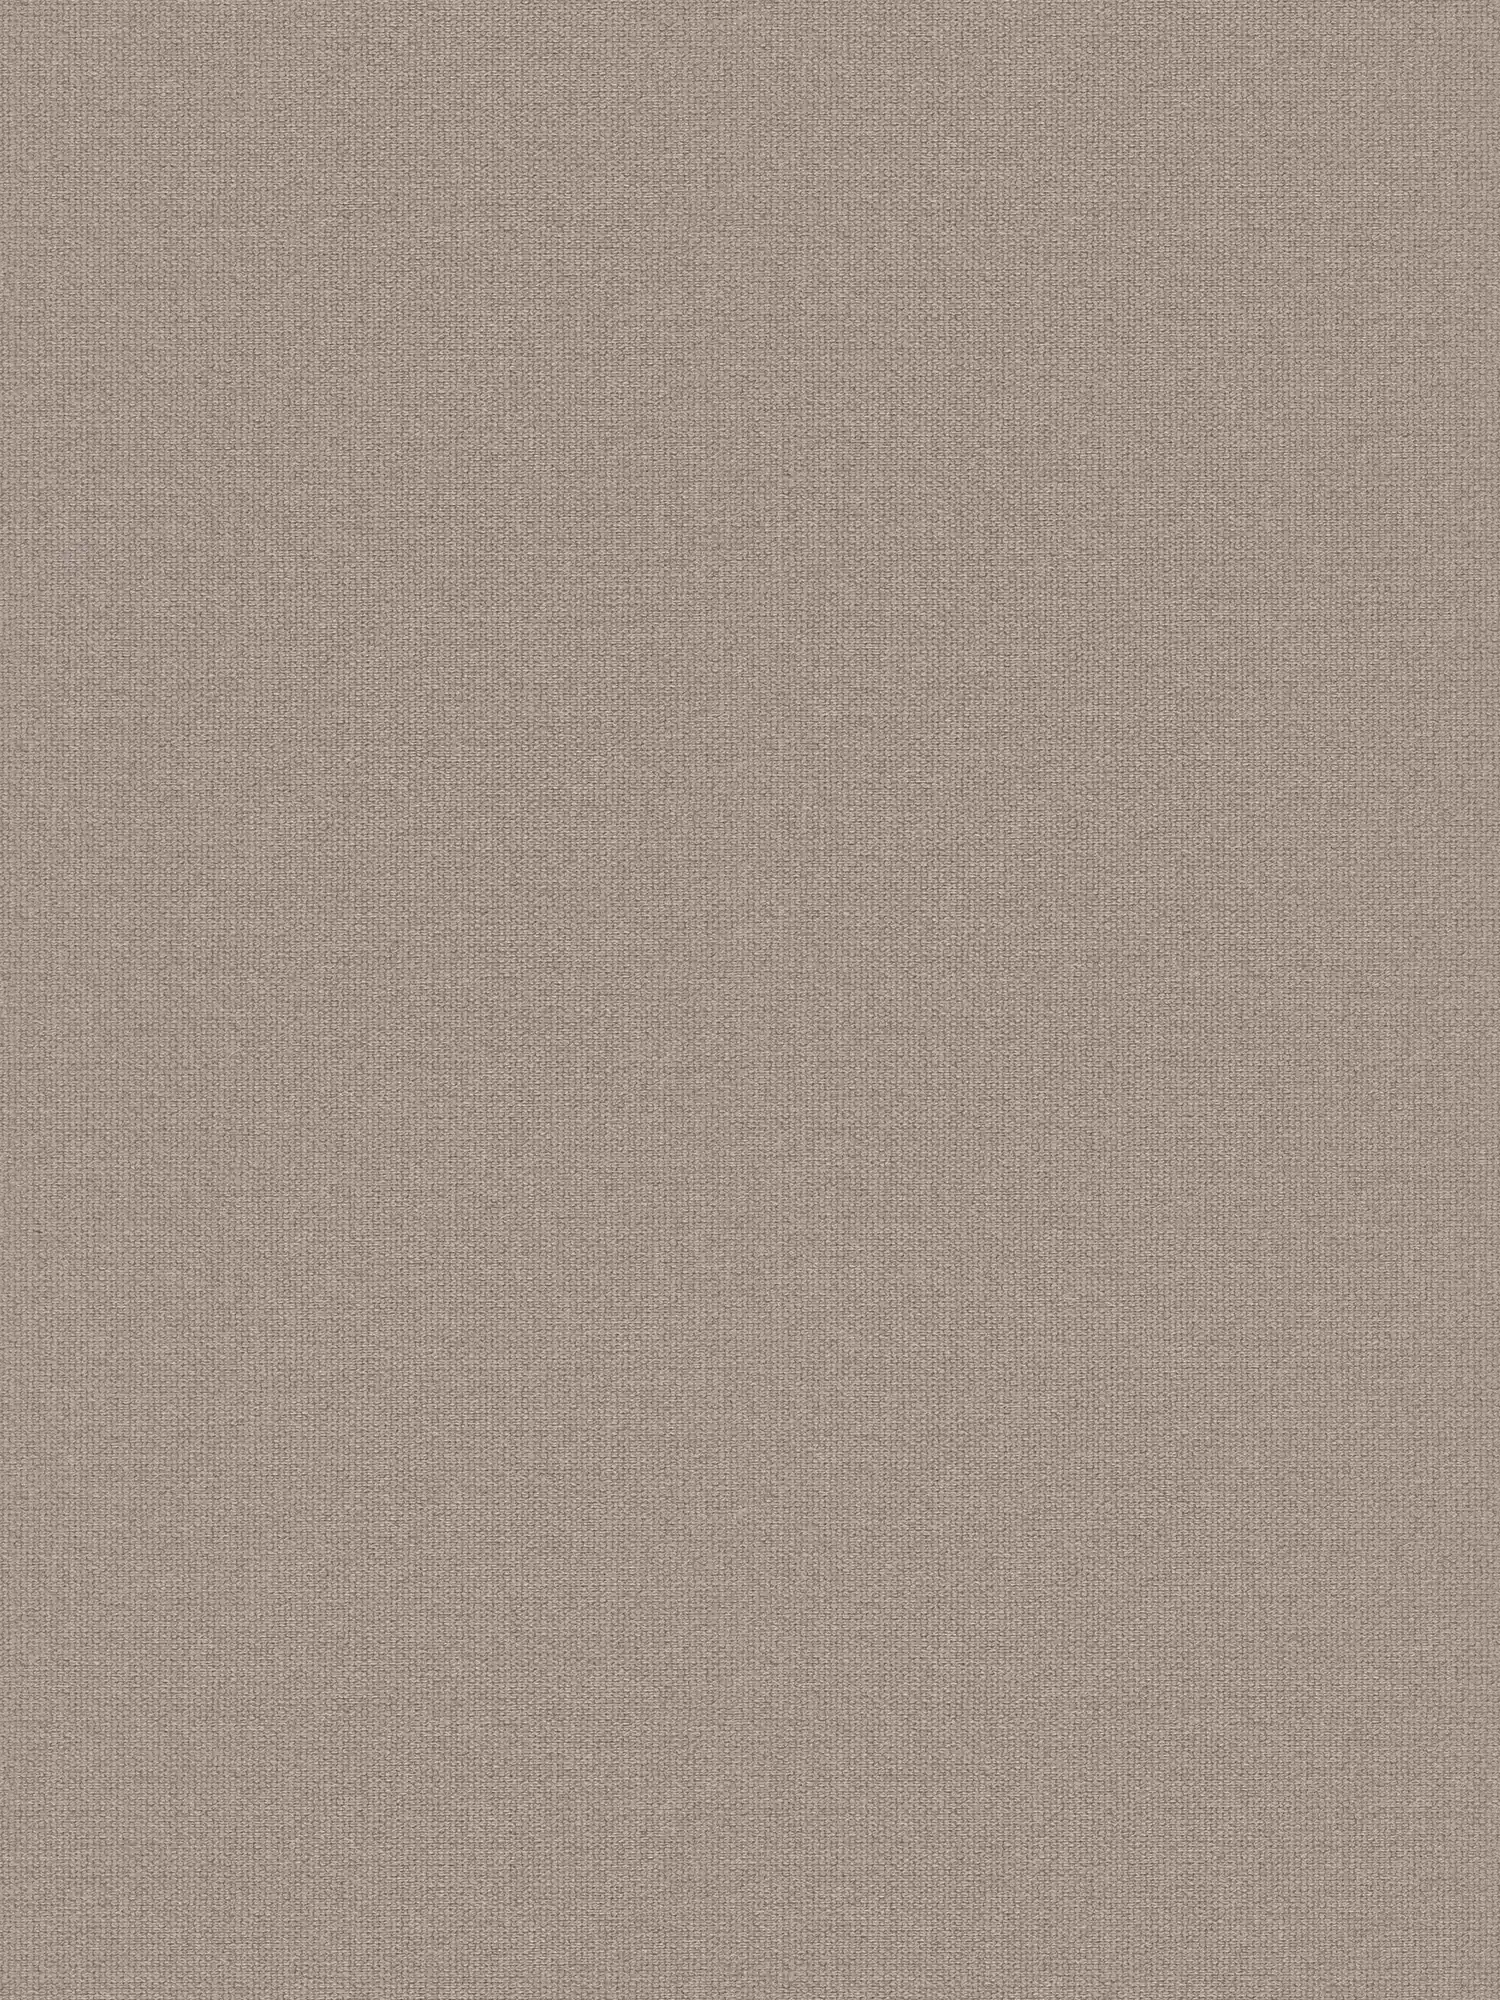 Wallpaper linen look with structural details, plain - grey, beige
